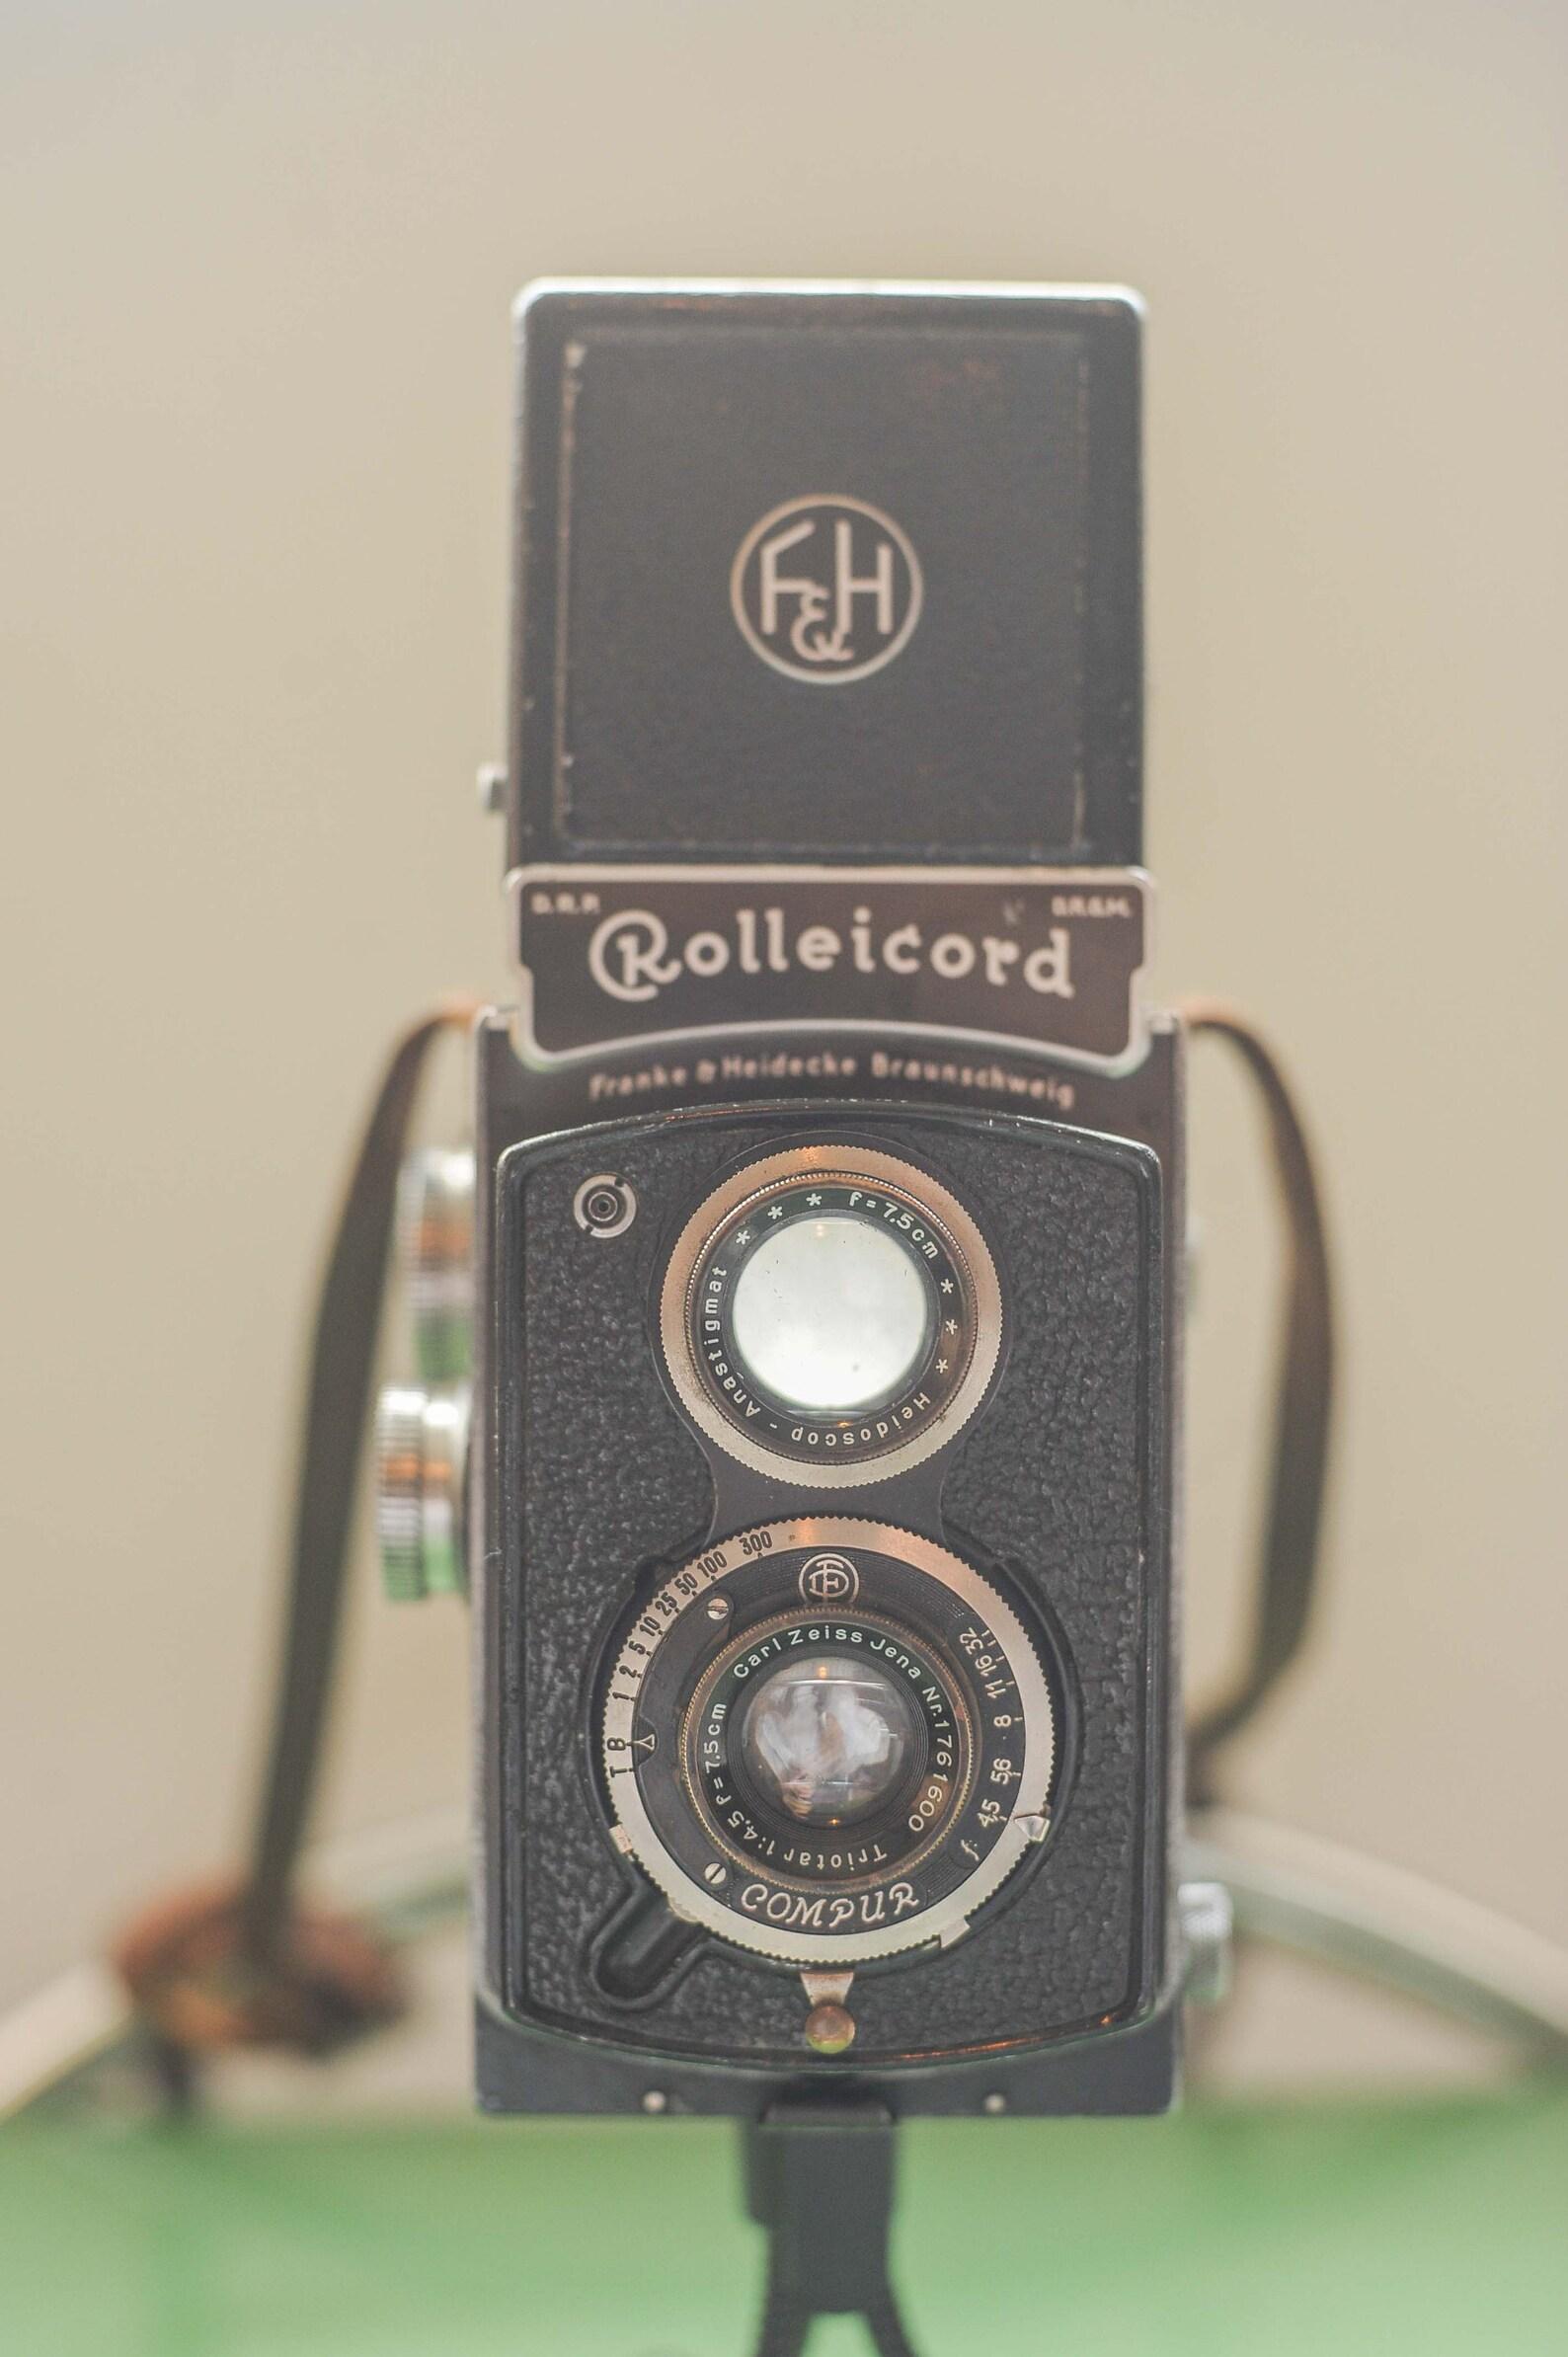 Franke & Heidecke Rolleicord Ia Model 1 - Model K3 - 520 Twin lens Reflex Camera 120 Sheet Film Camera Made In Germany 1936-1937


Highslide JSMarch 1936 - May 1937, 9,459 pieces.
Serials: 1.760.000 - 1.947.000, engraved in taking lens (internal